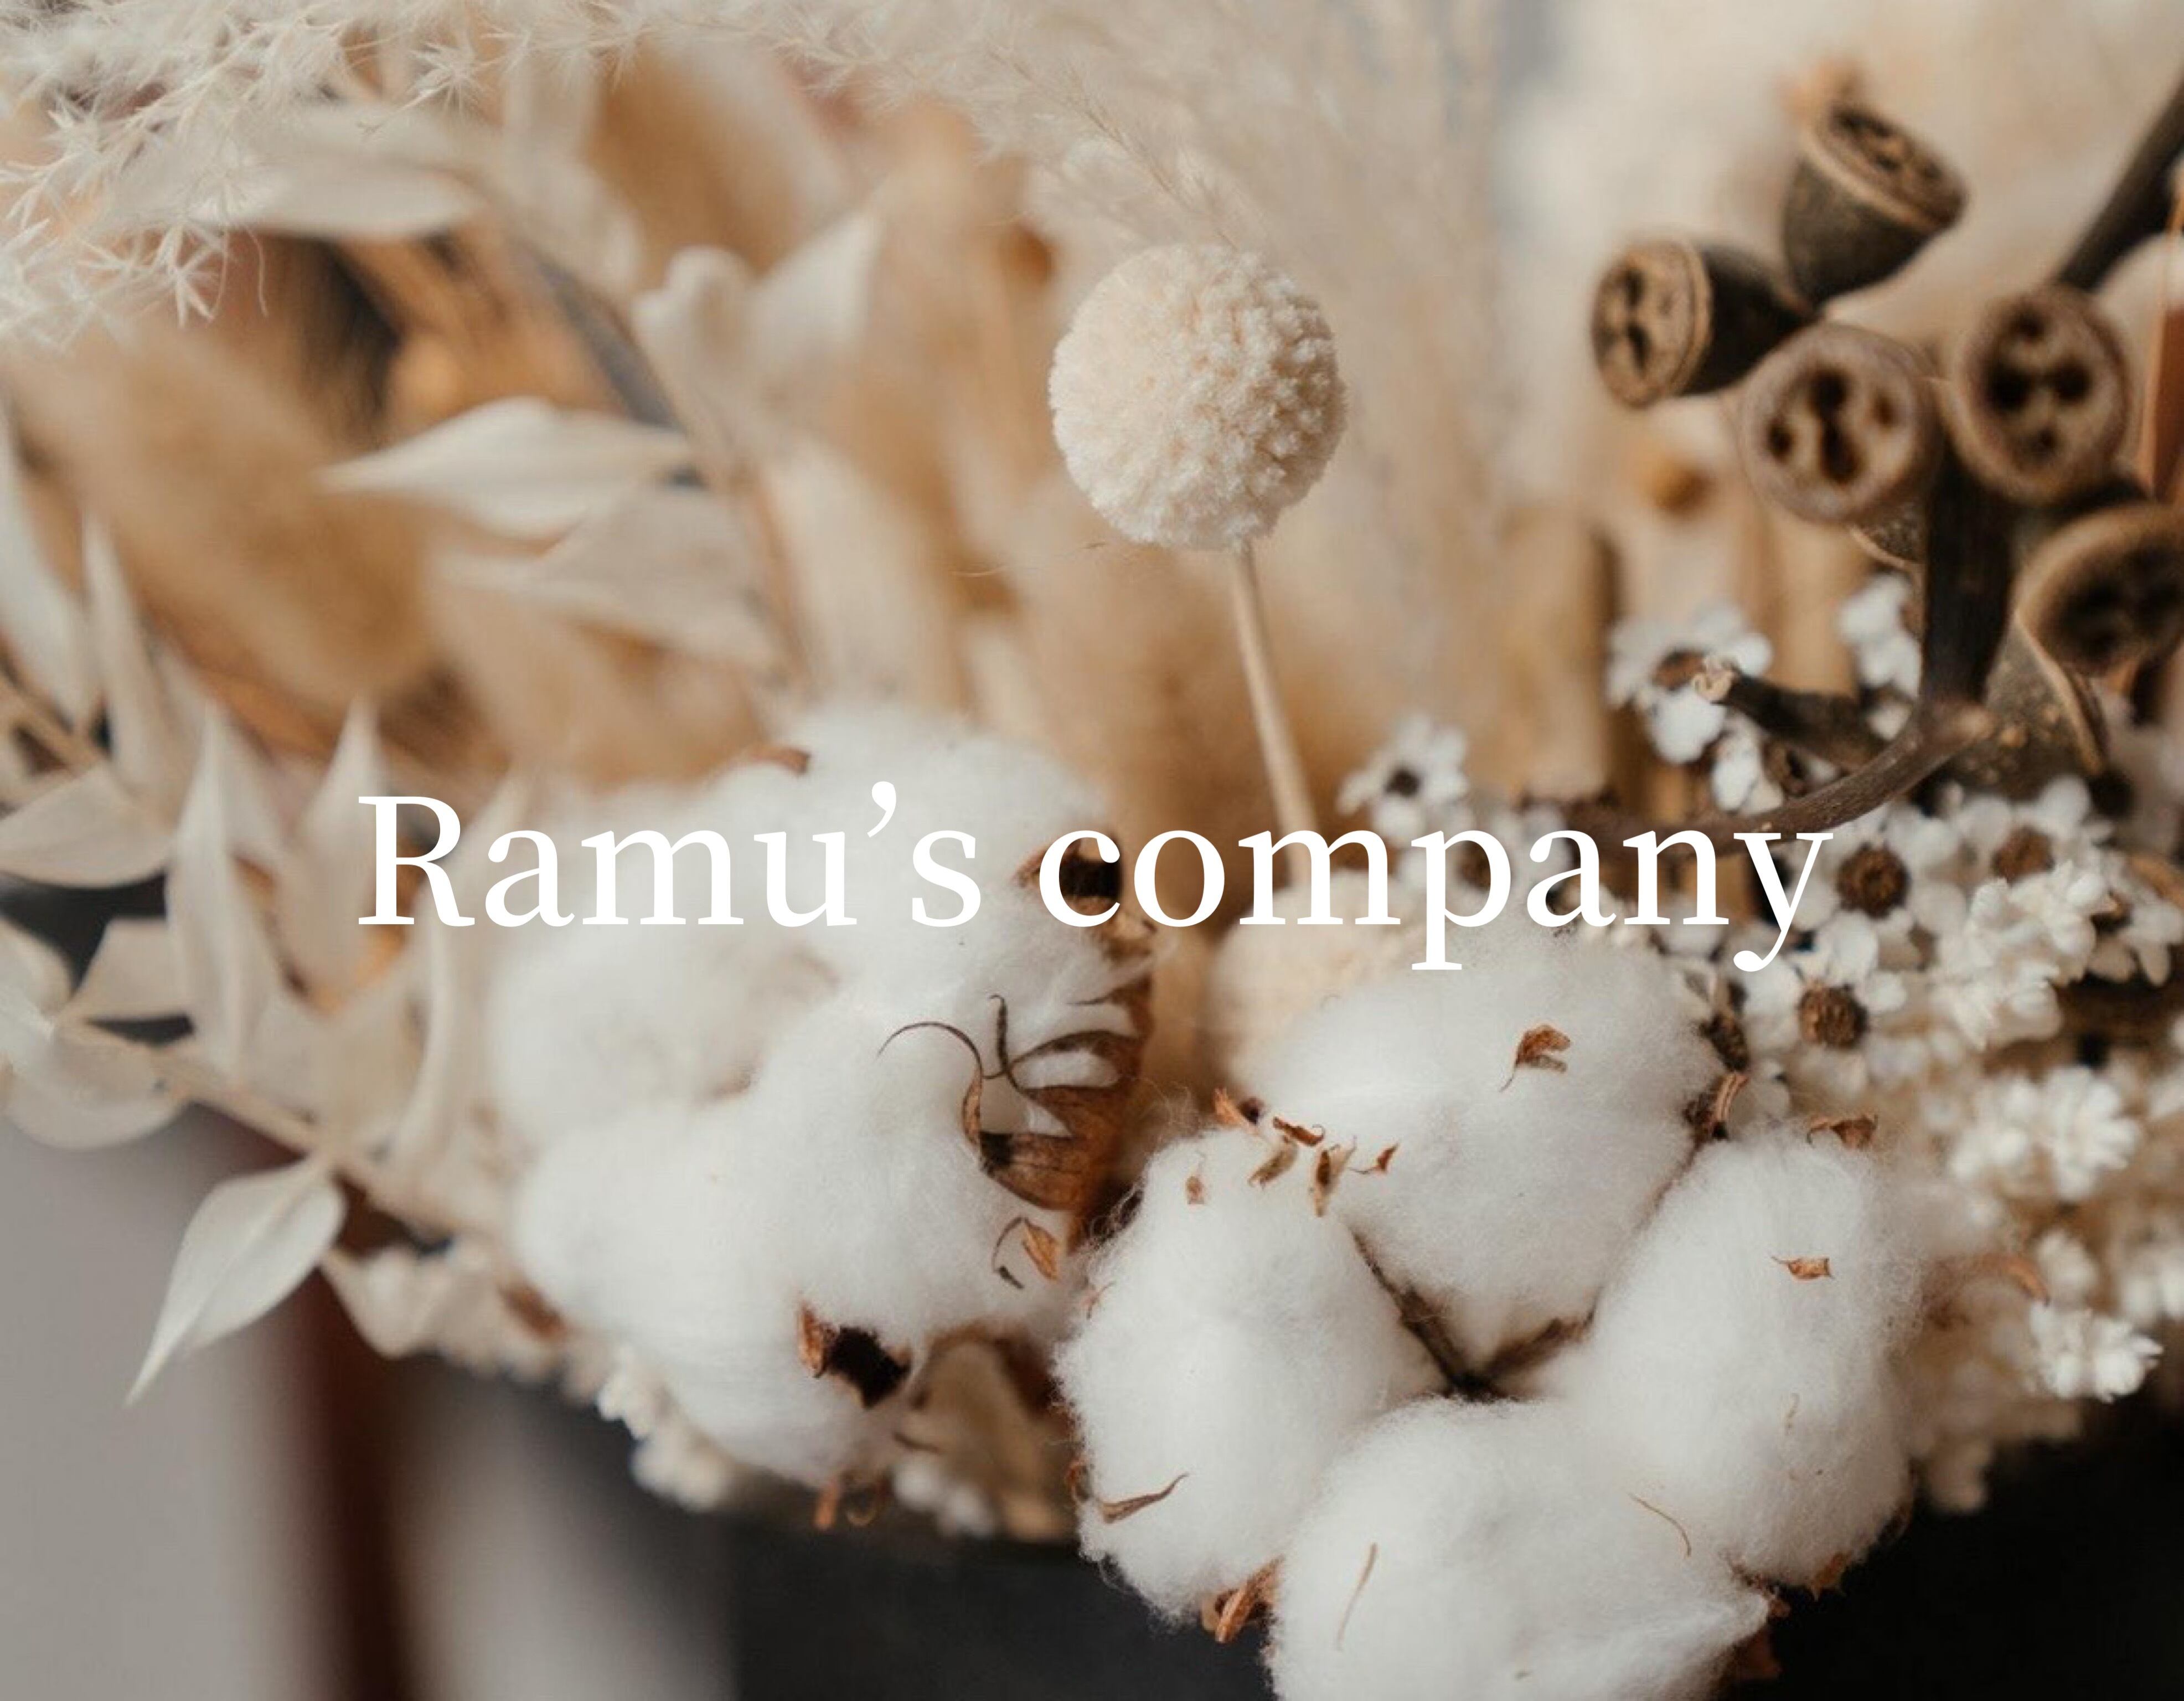 Ramu’s company